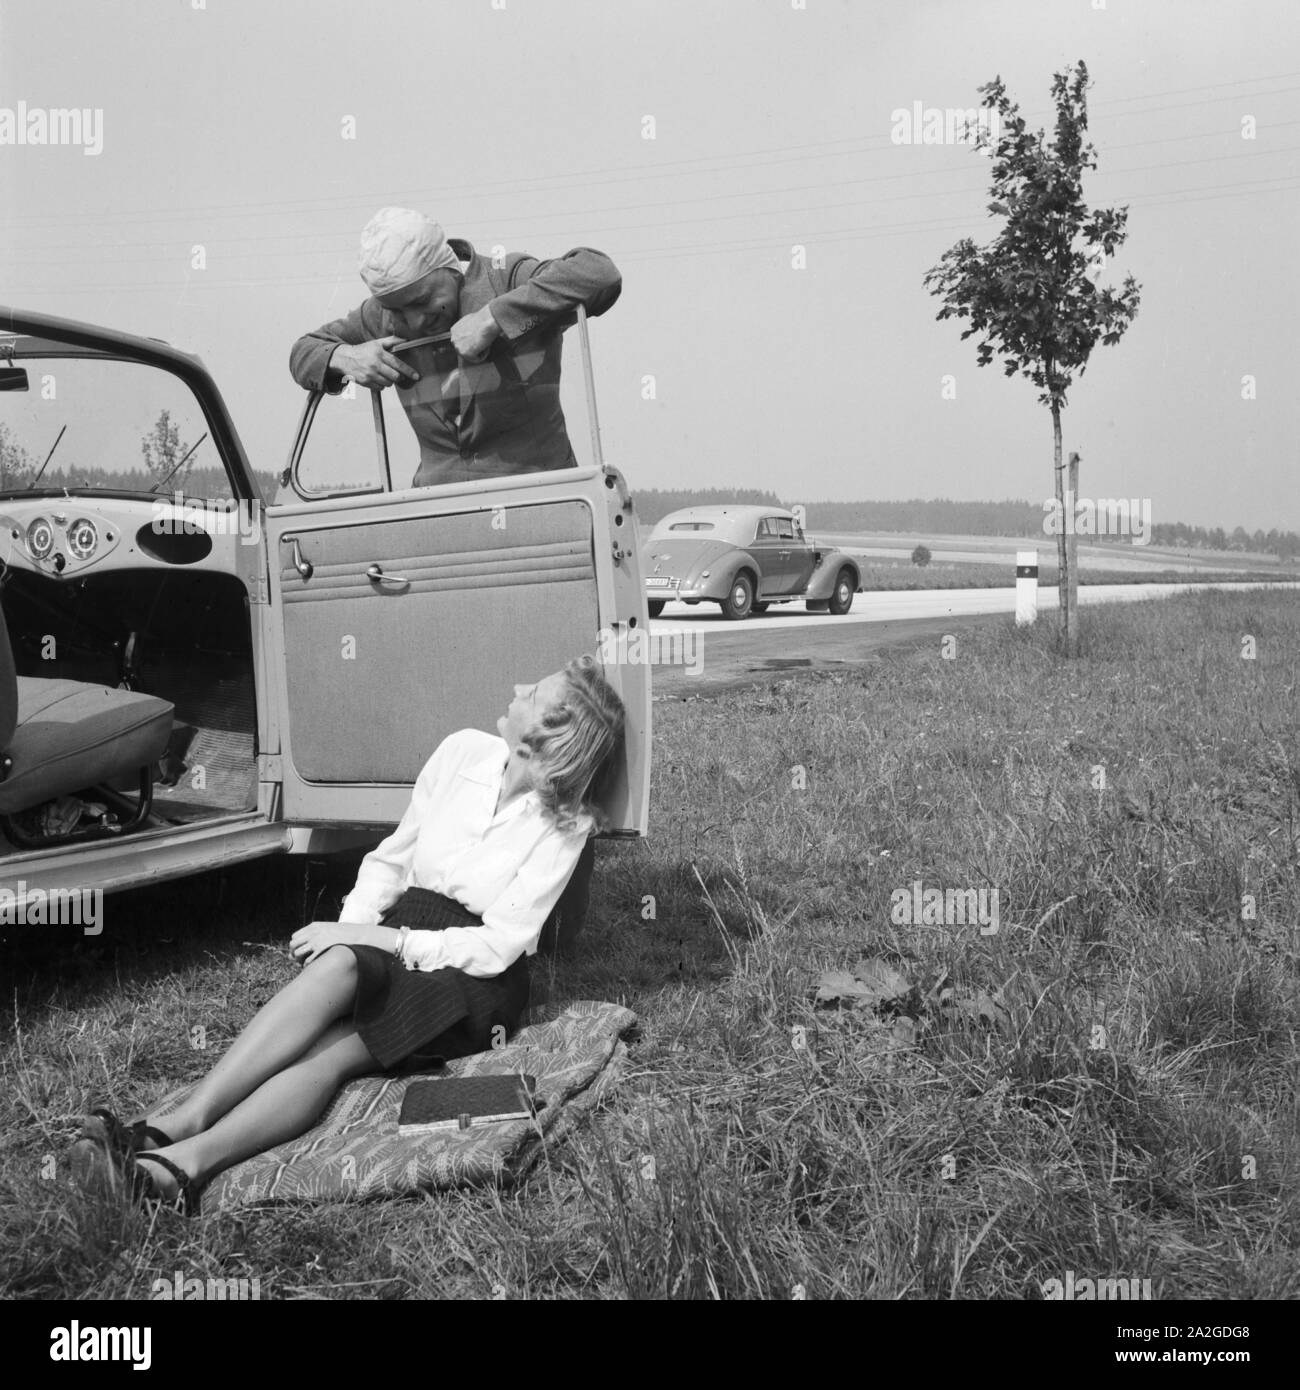 Rast am Straßenrand, Deutschland 1930er Jahre. Resting by the street, Germany 1930s. Stock Photo